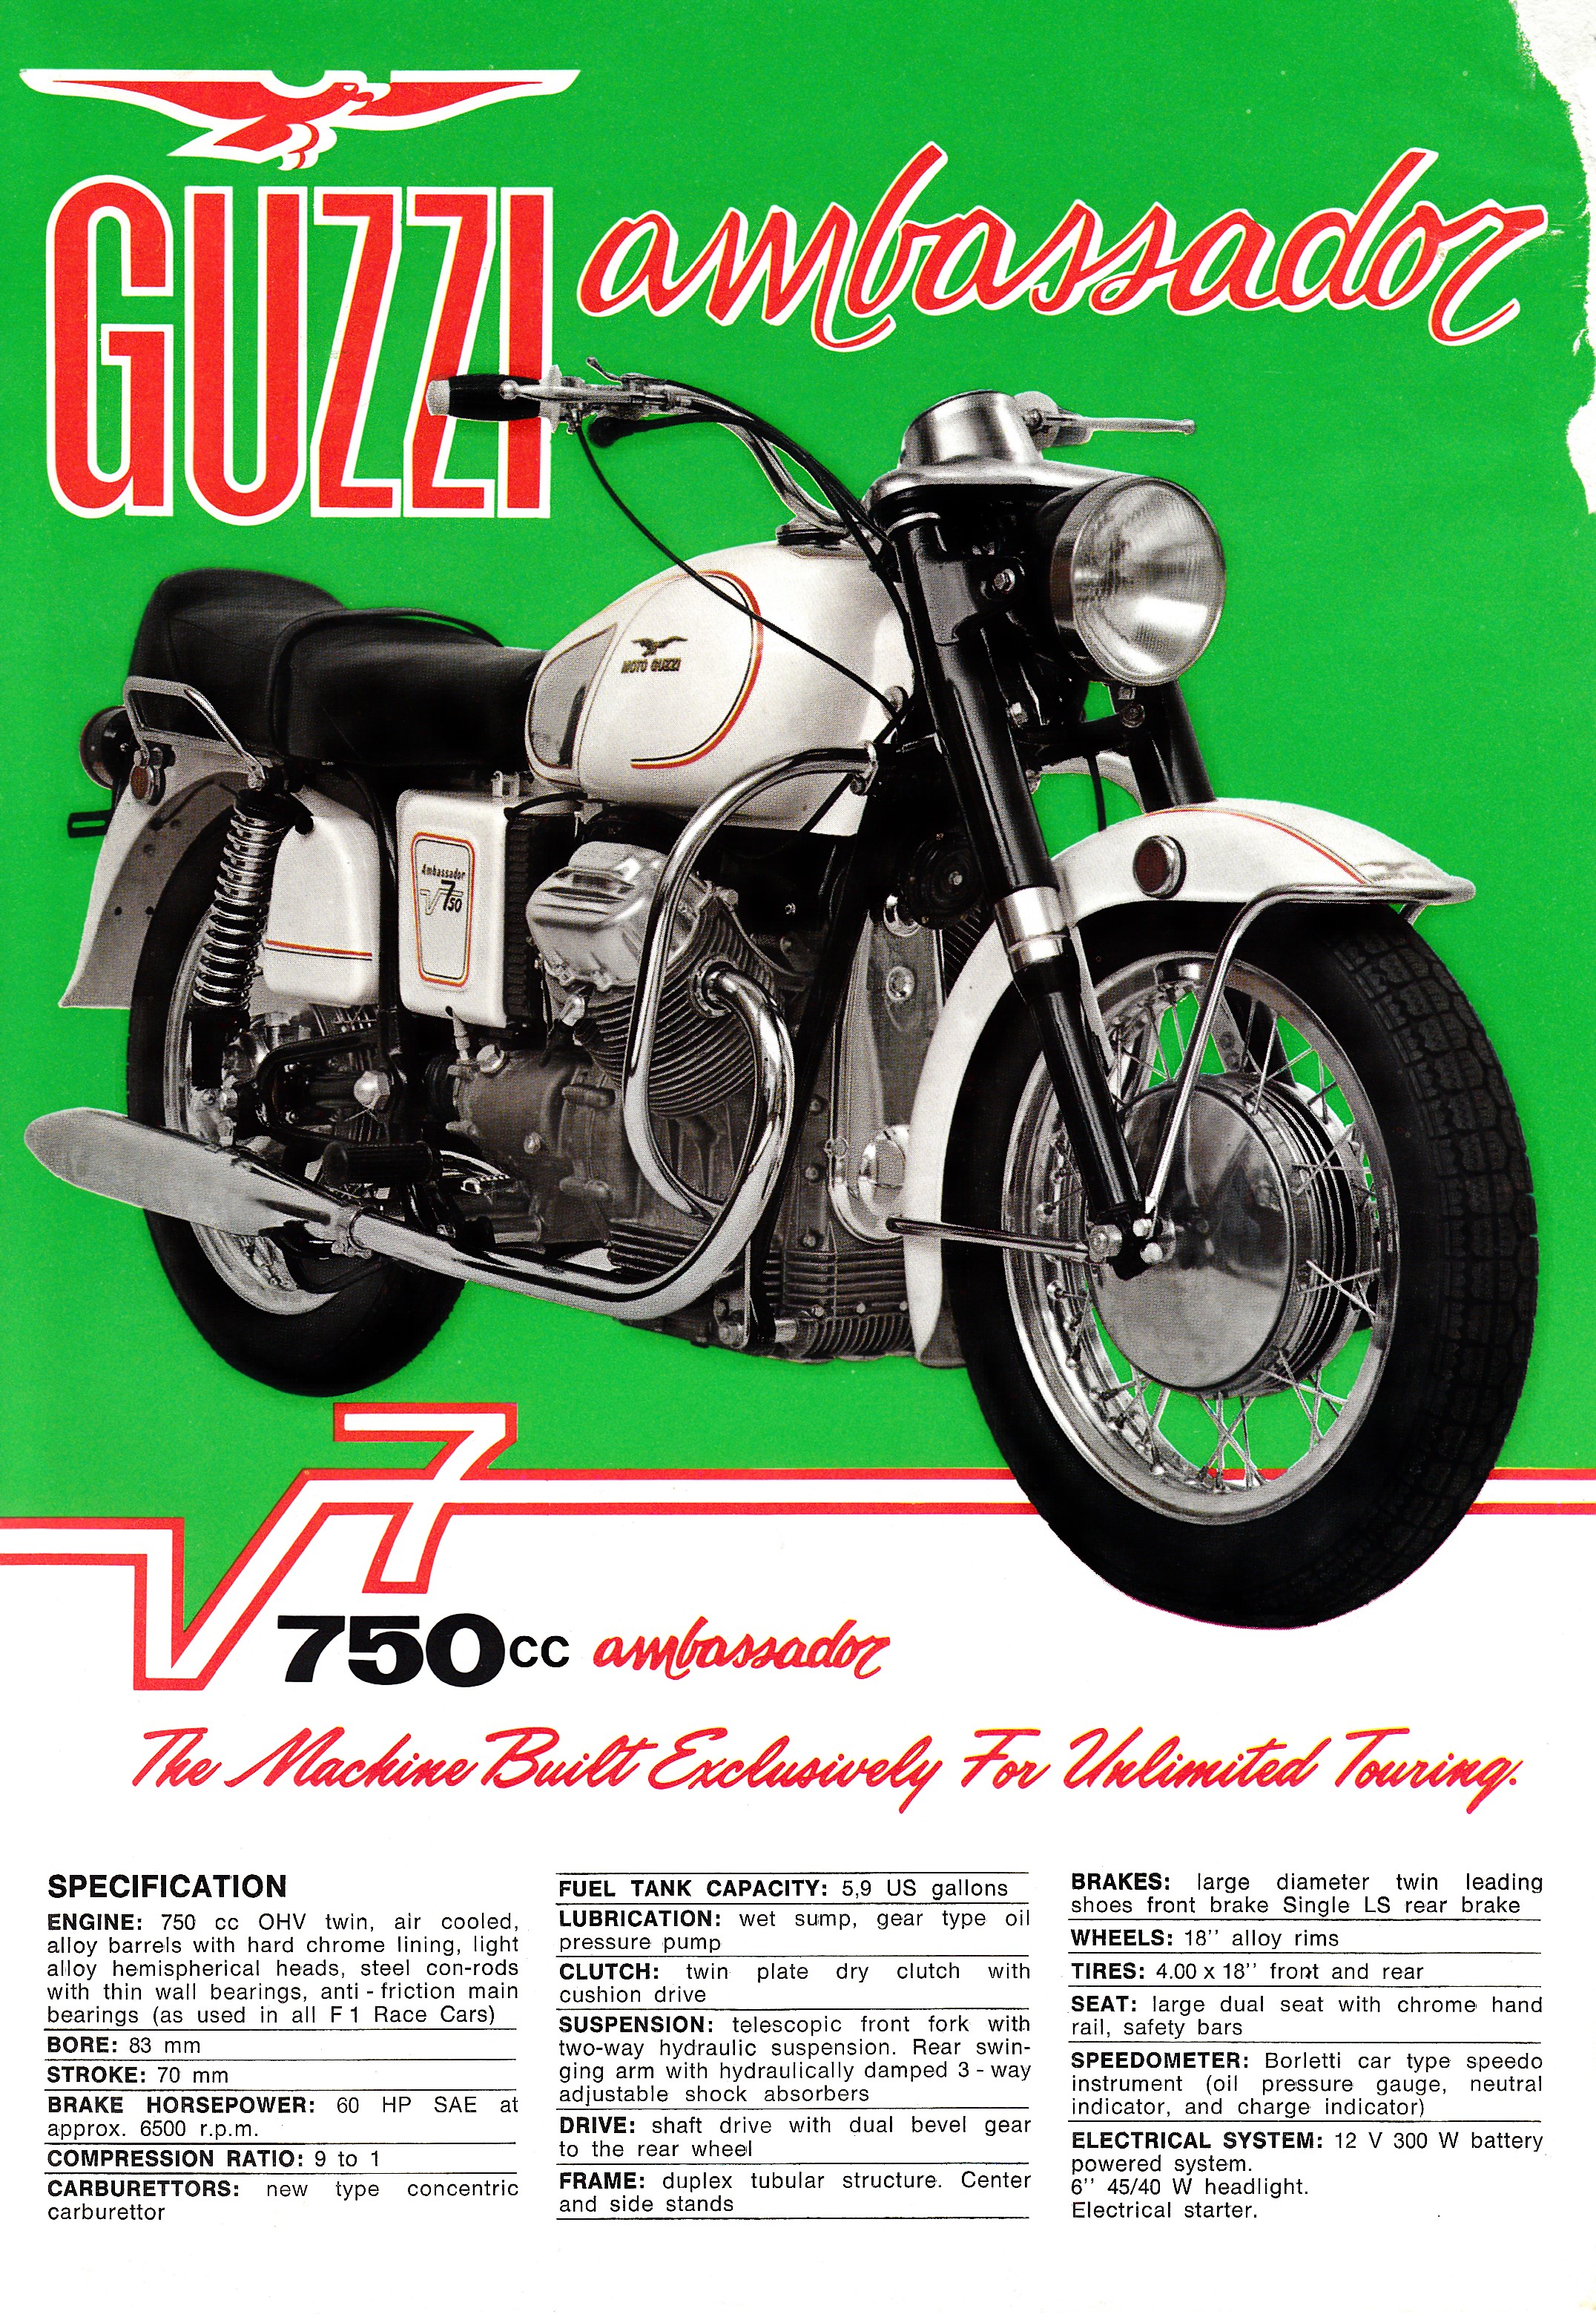 Moto Guzzi Ambassador Factory Brochure, Page 1 of 2.